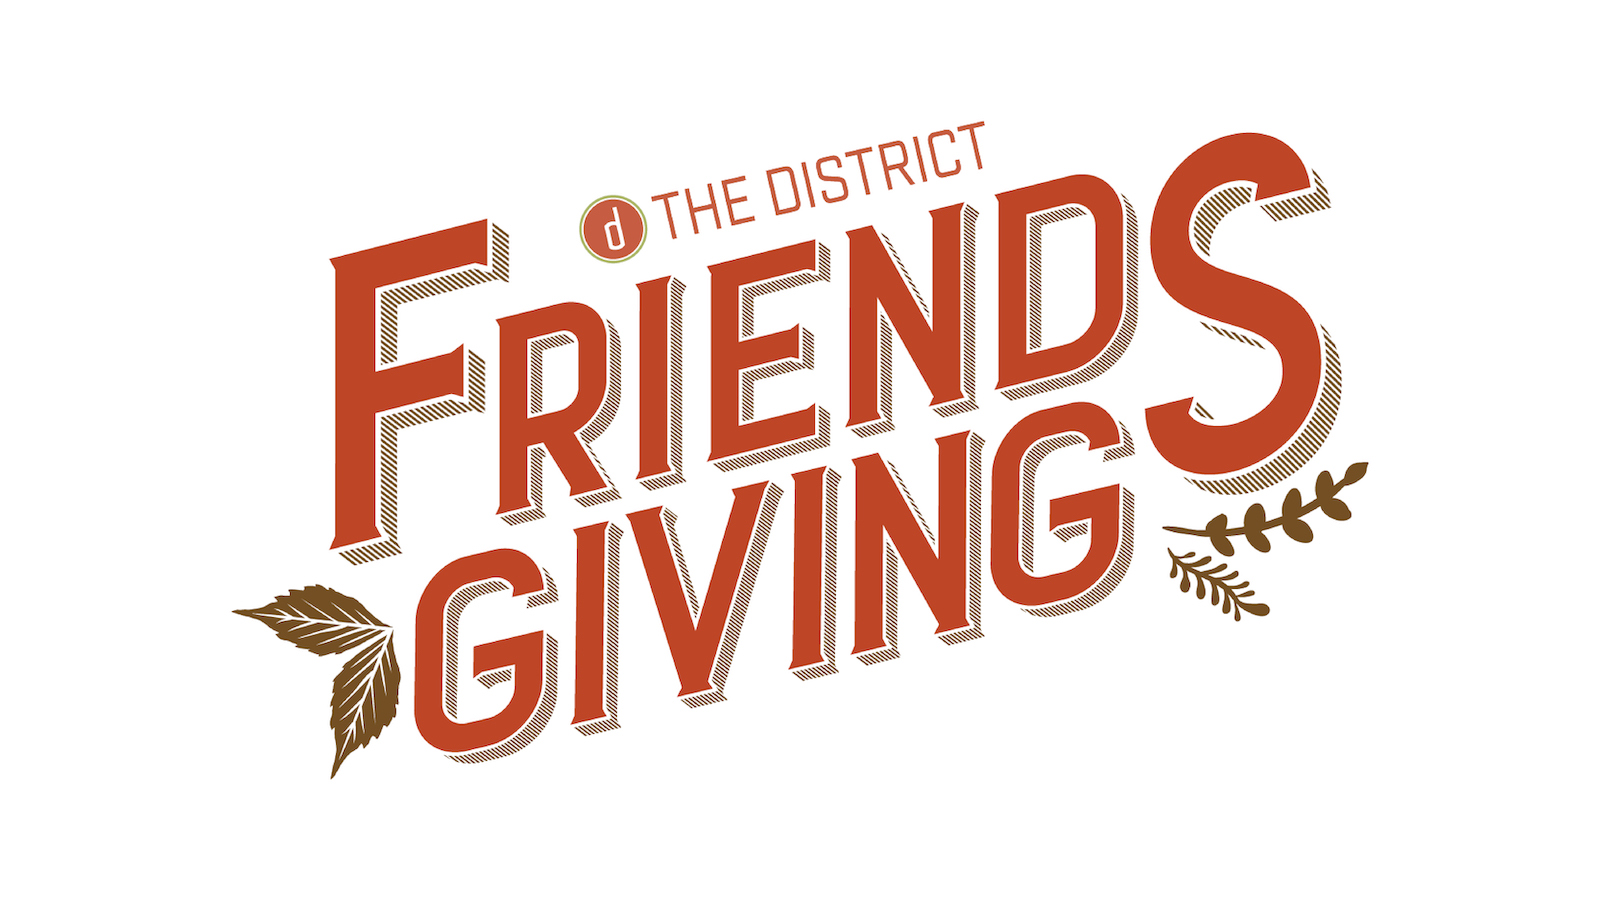 The District Friendsgiving logo